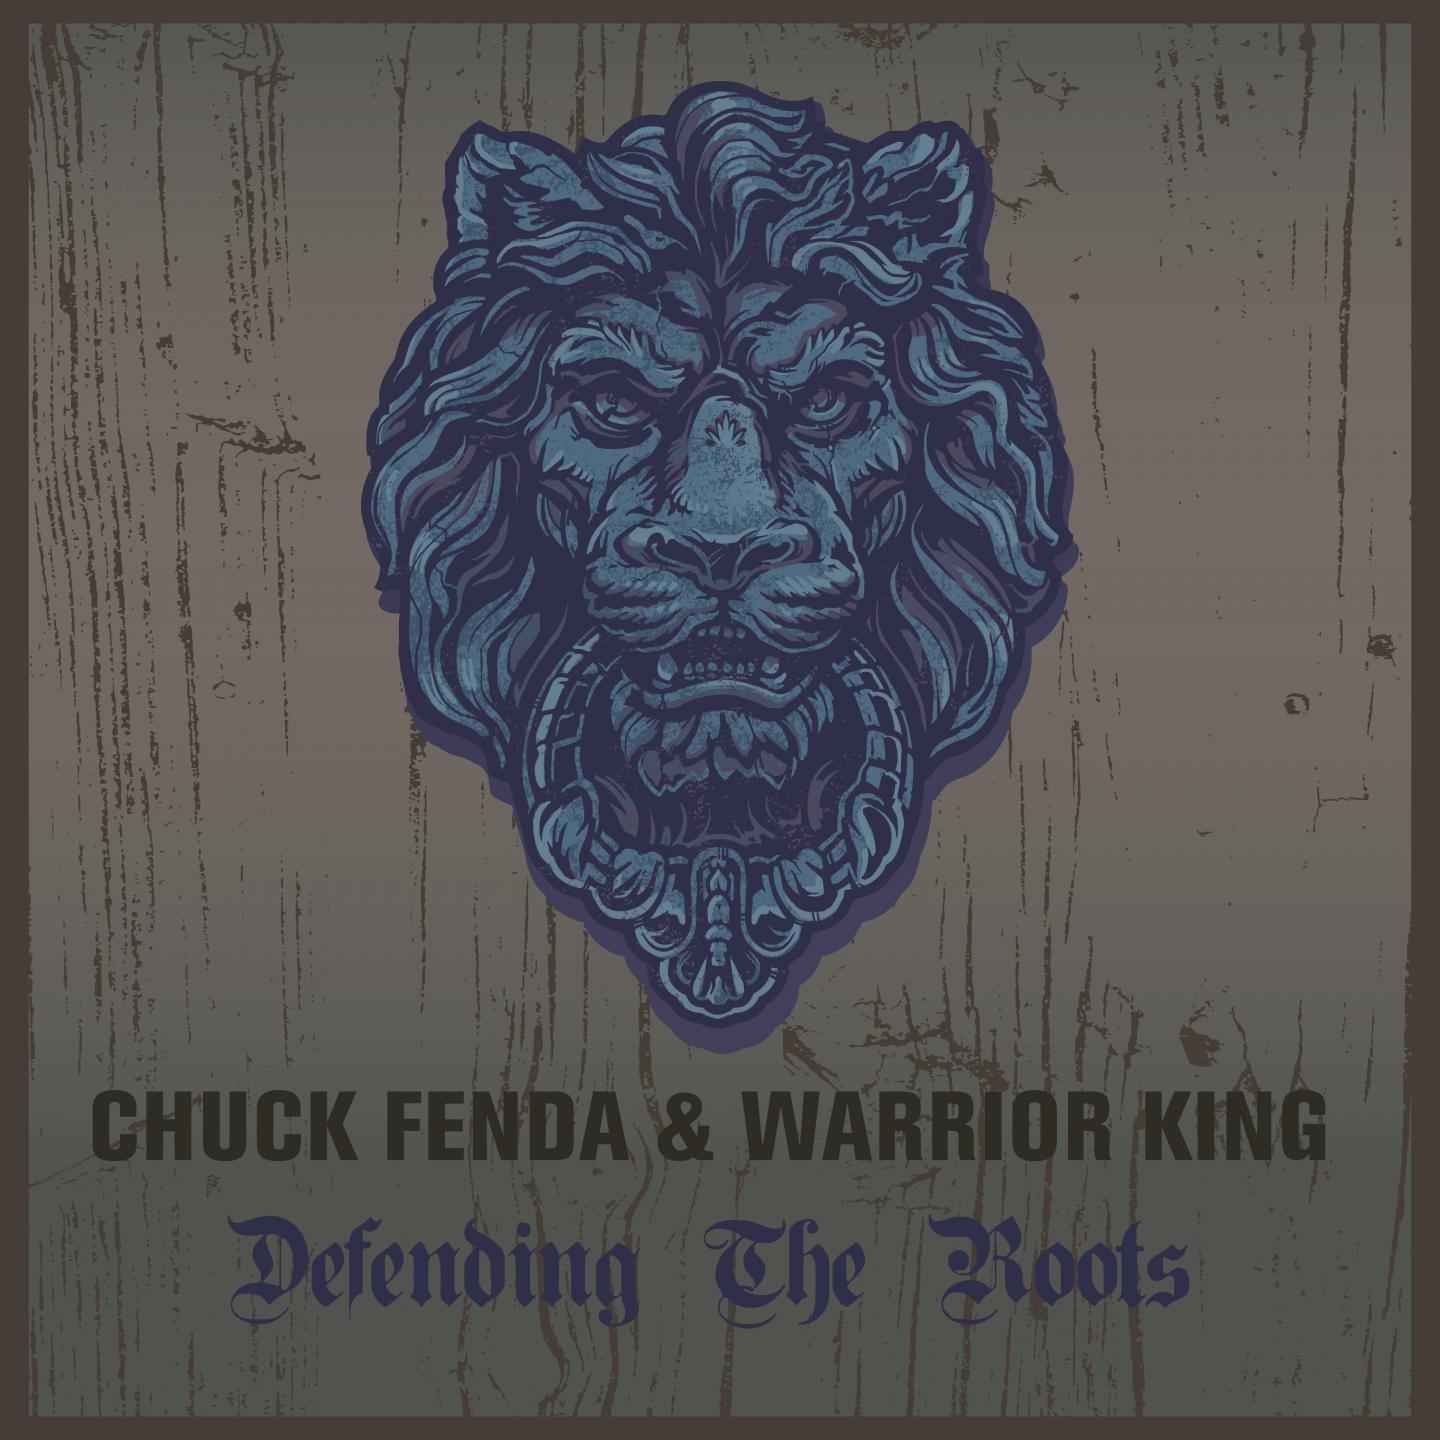 Chuck Fenda & Warrior King Defending the Roots